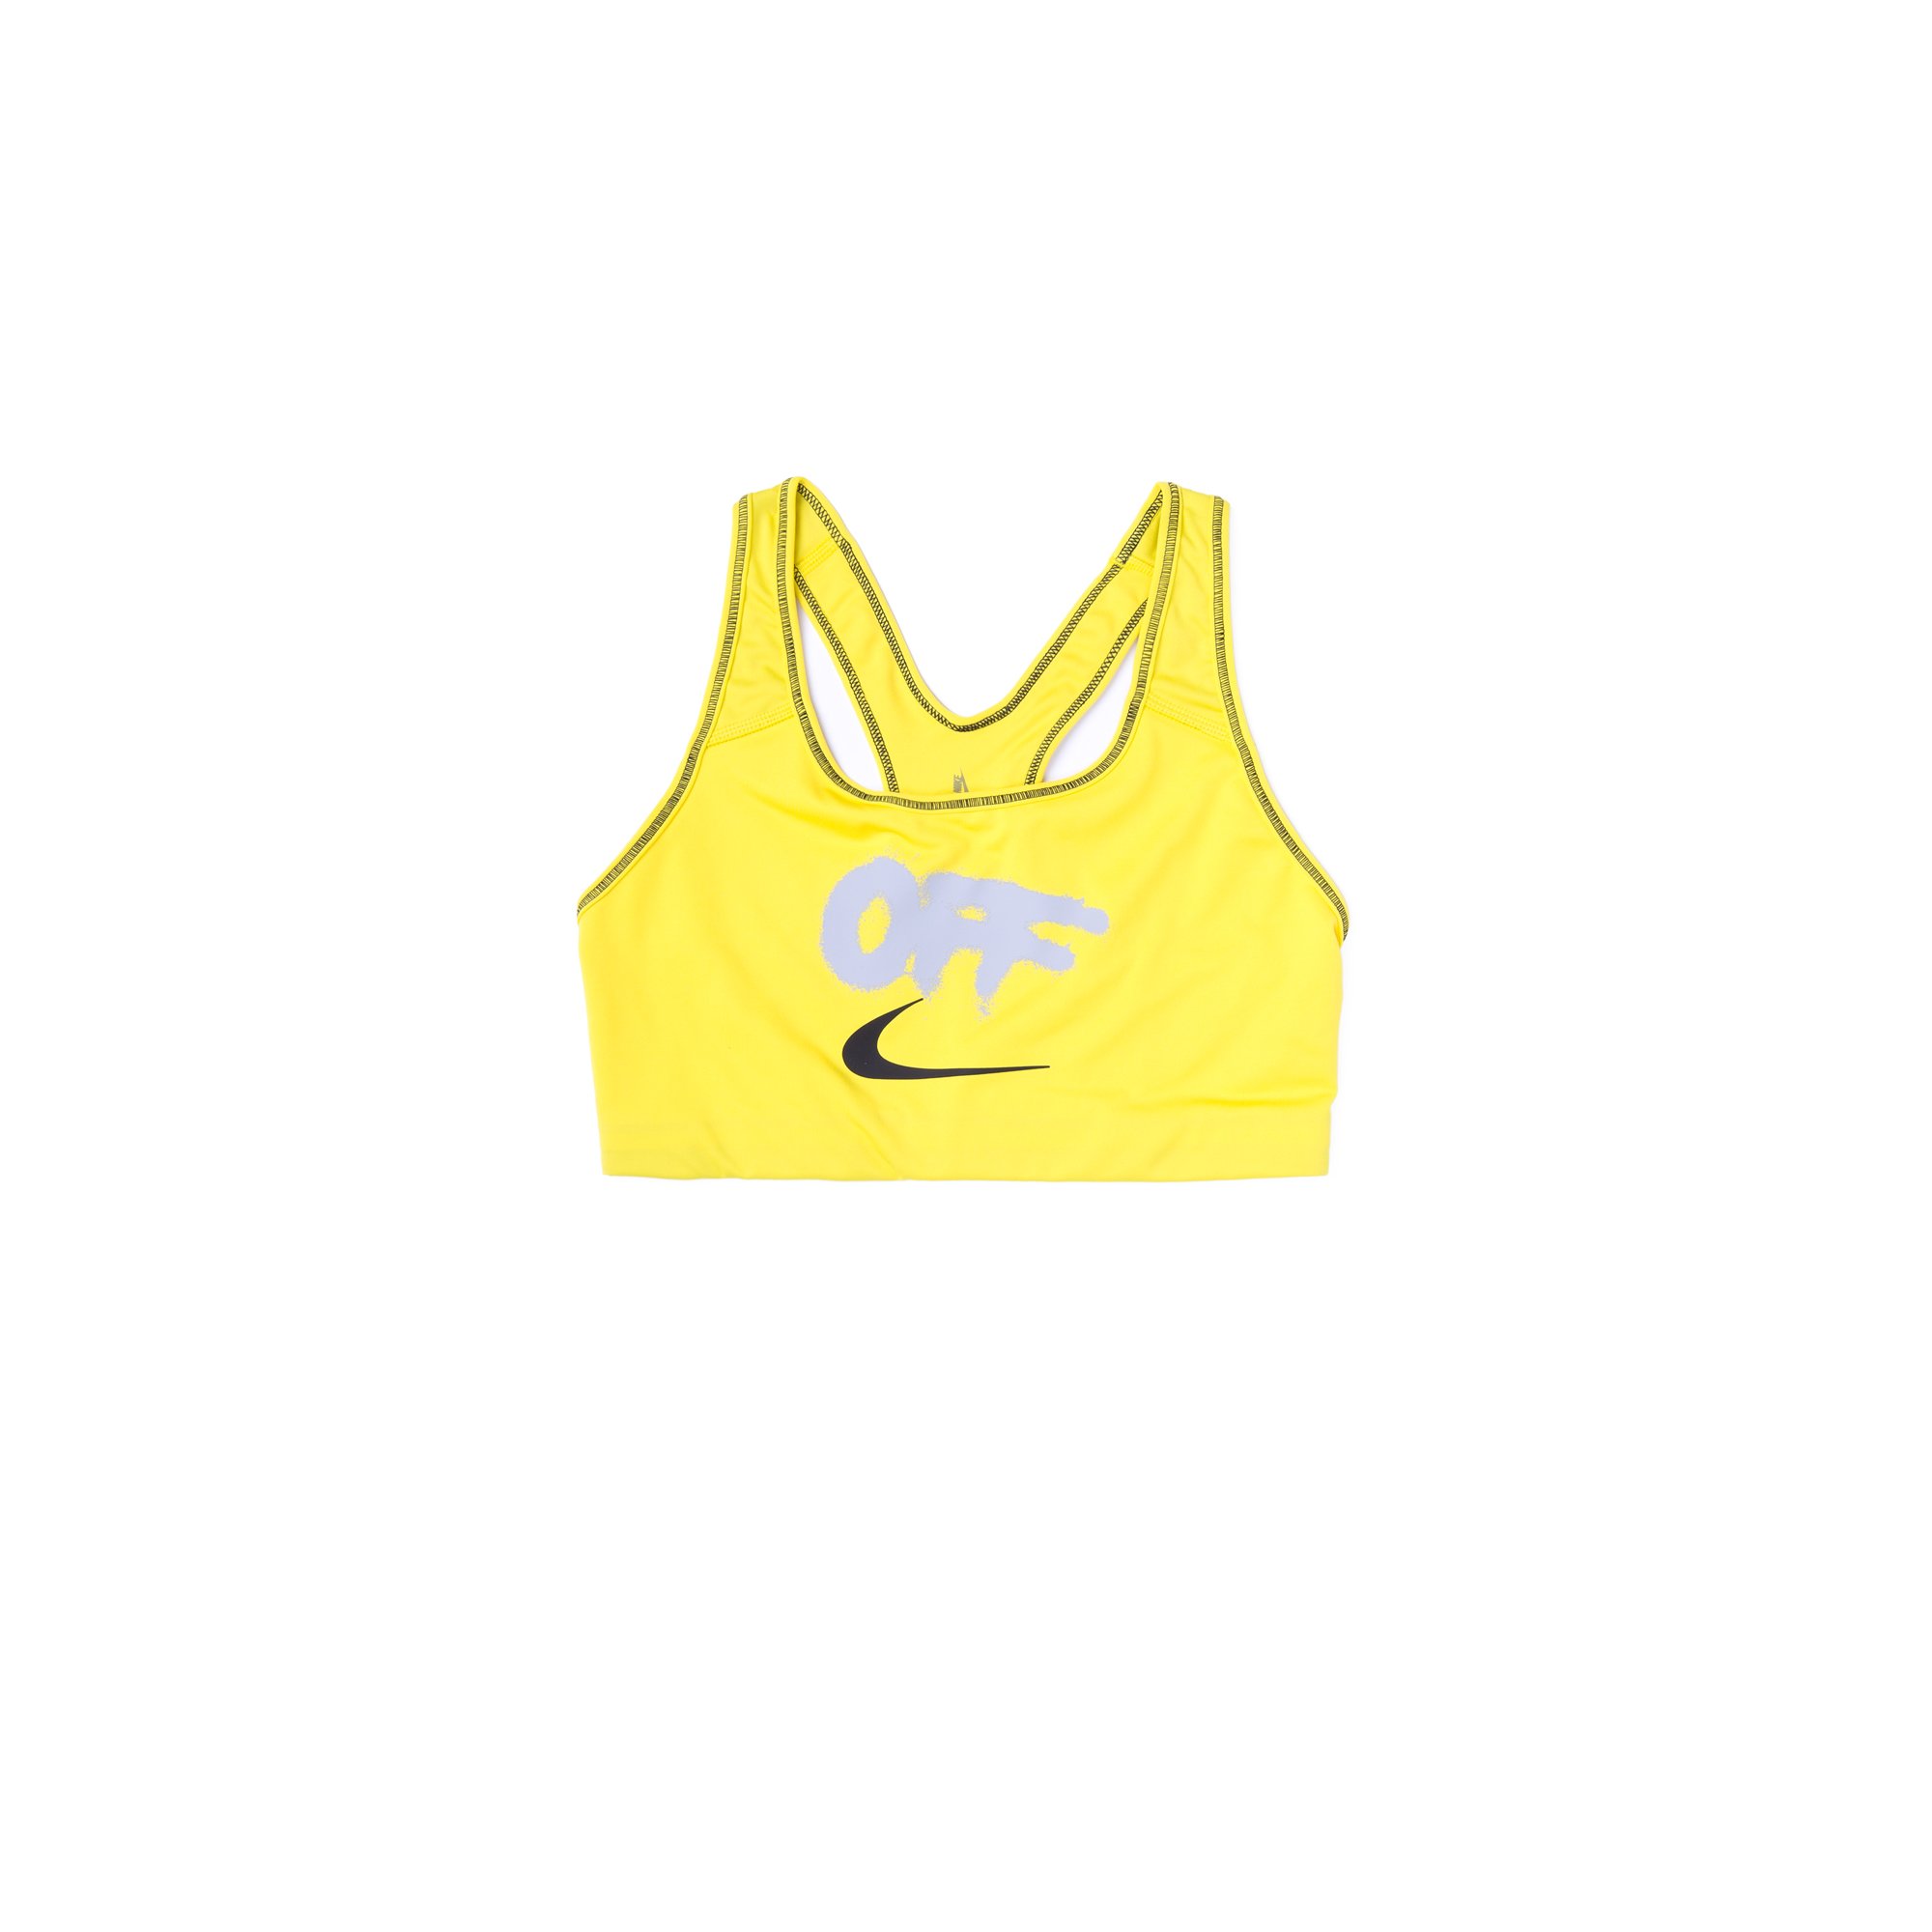 OFF-WHITE x Nike Women's Sports Bra 